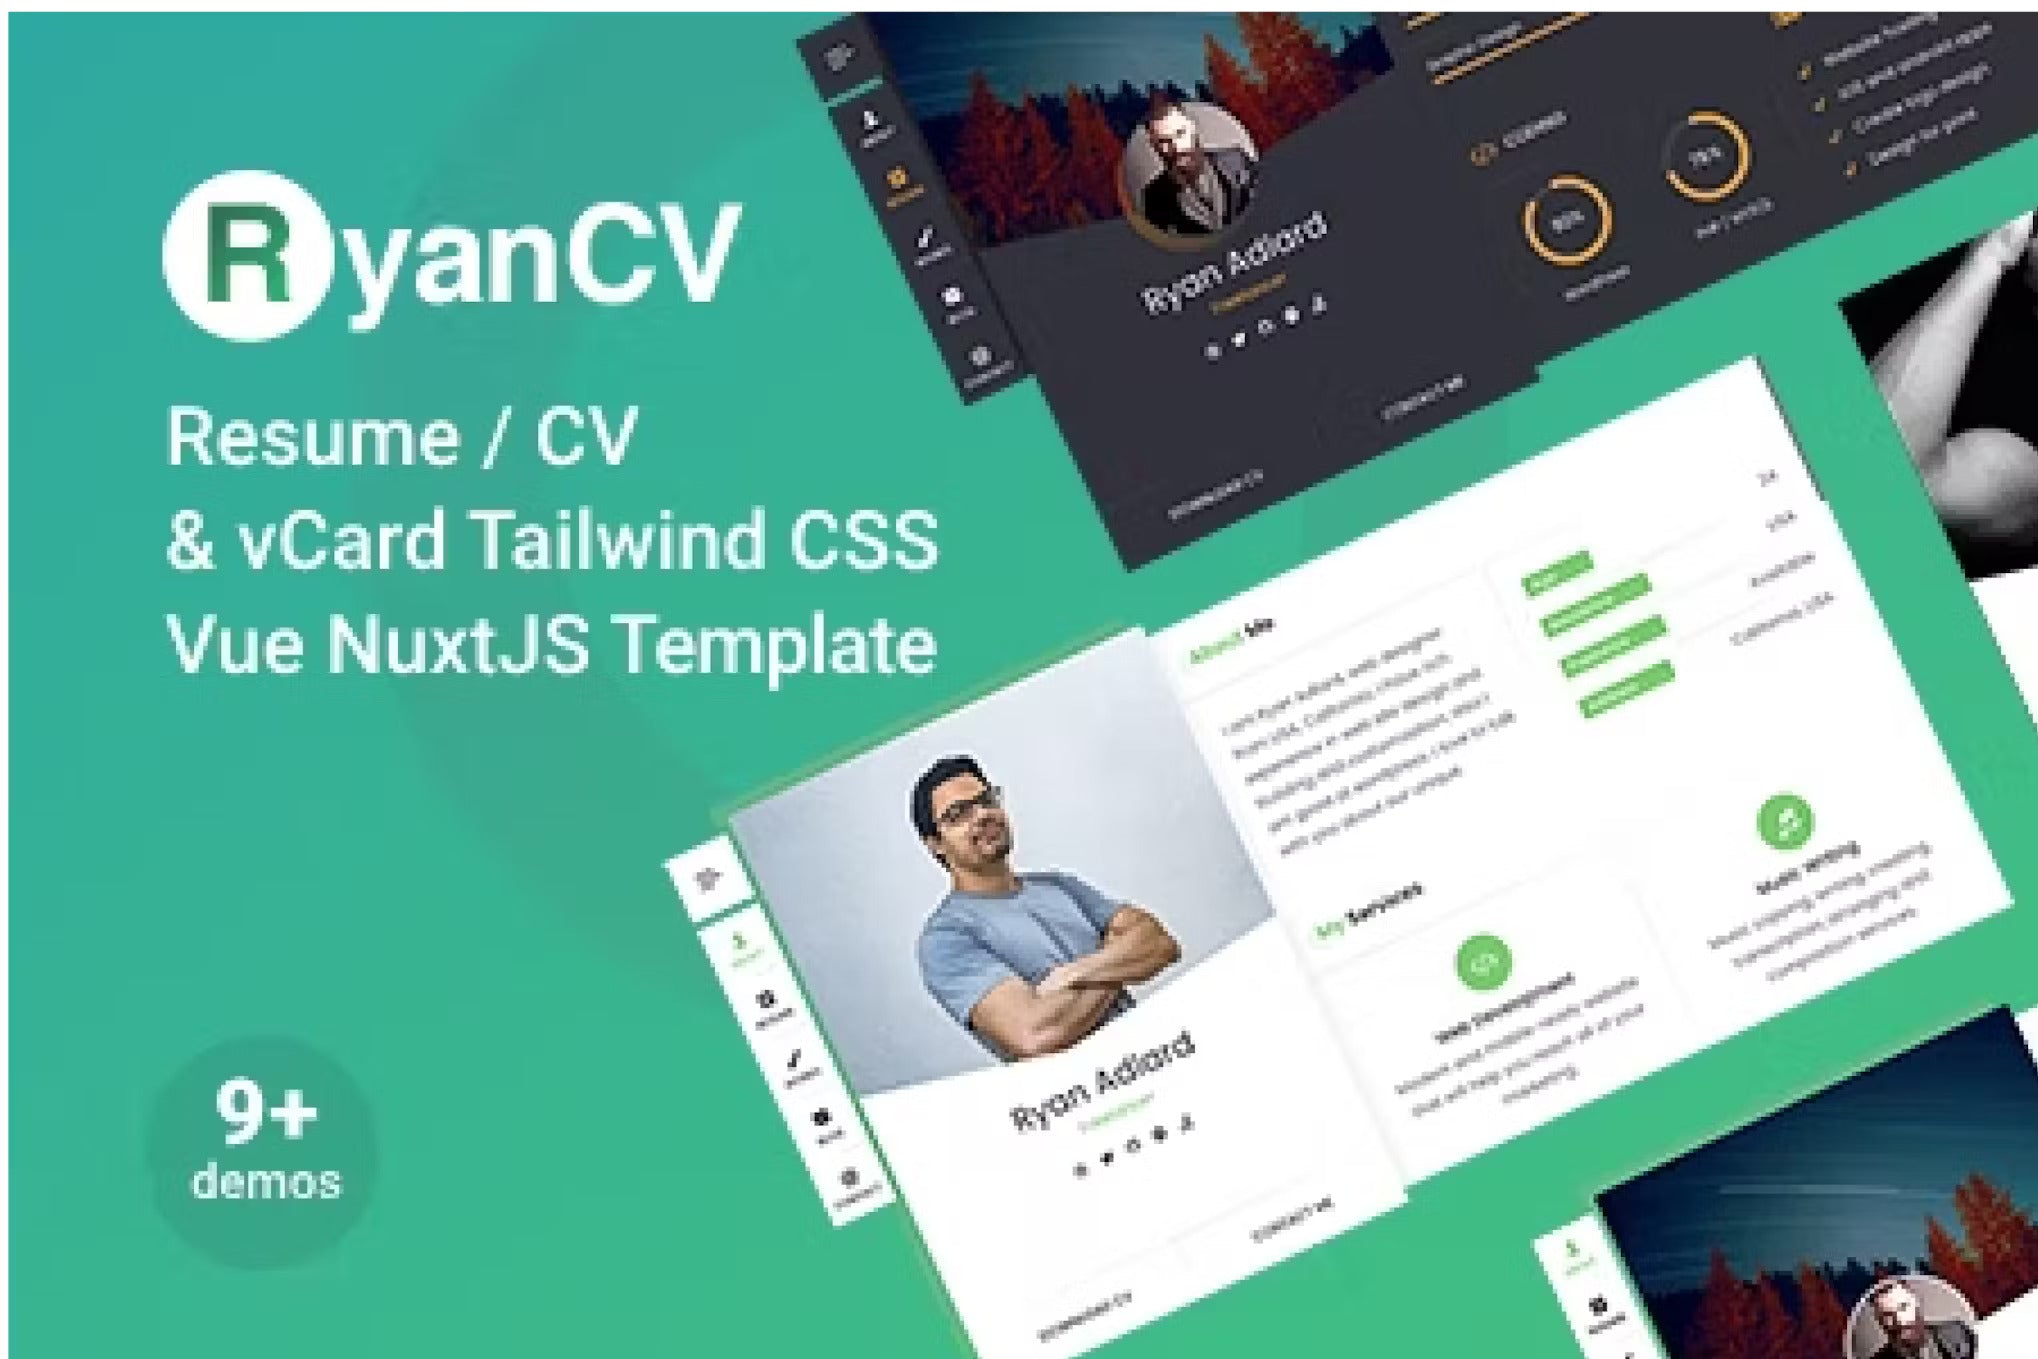 Ryan Tailwind CSS CV/Resume Vue NuxtJS Template by exstore